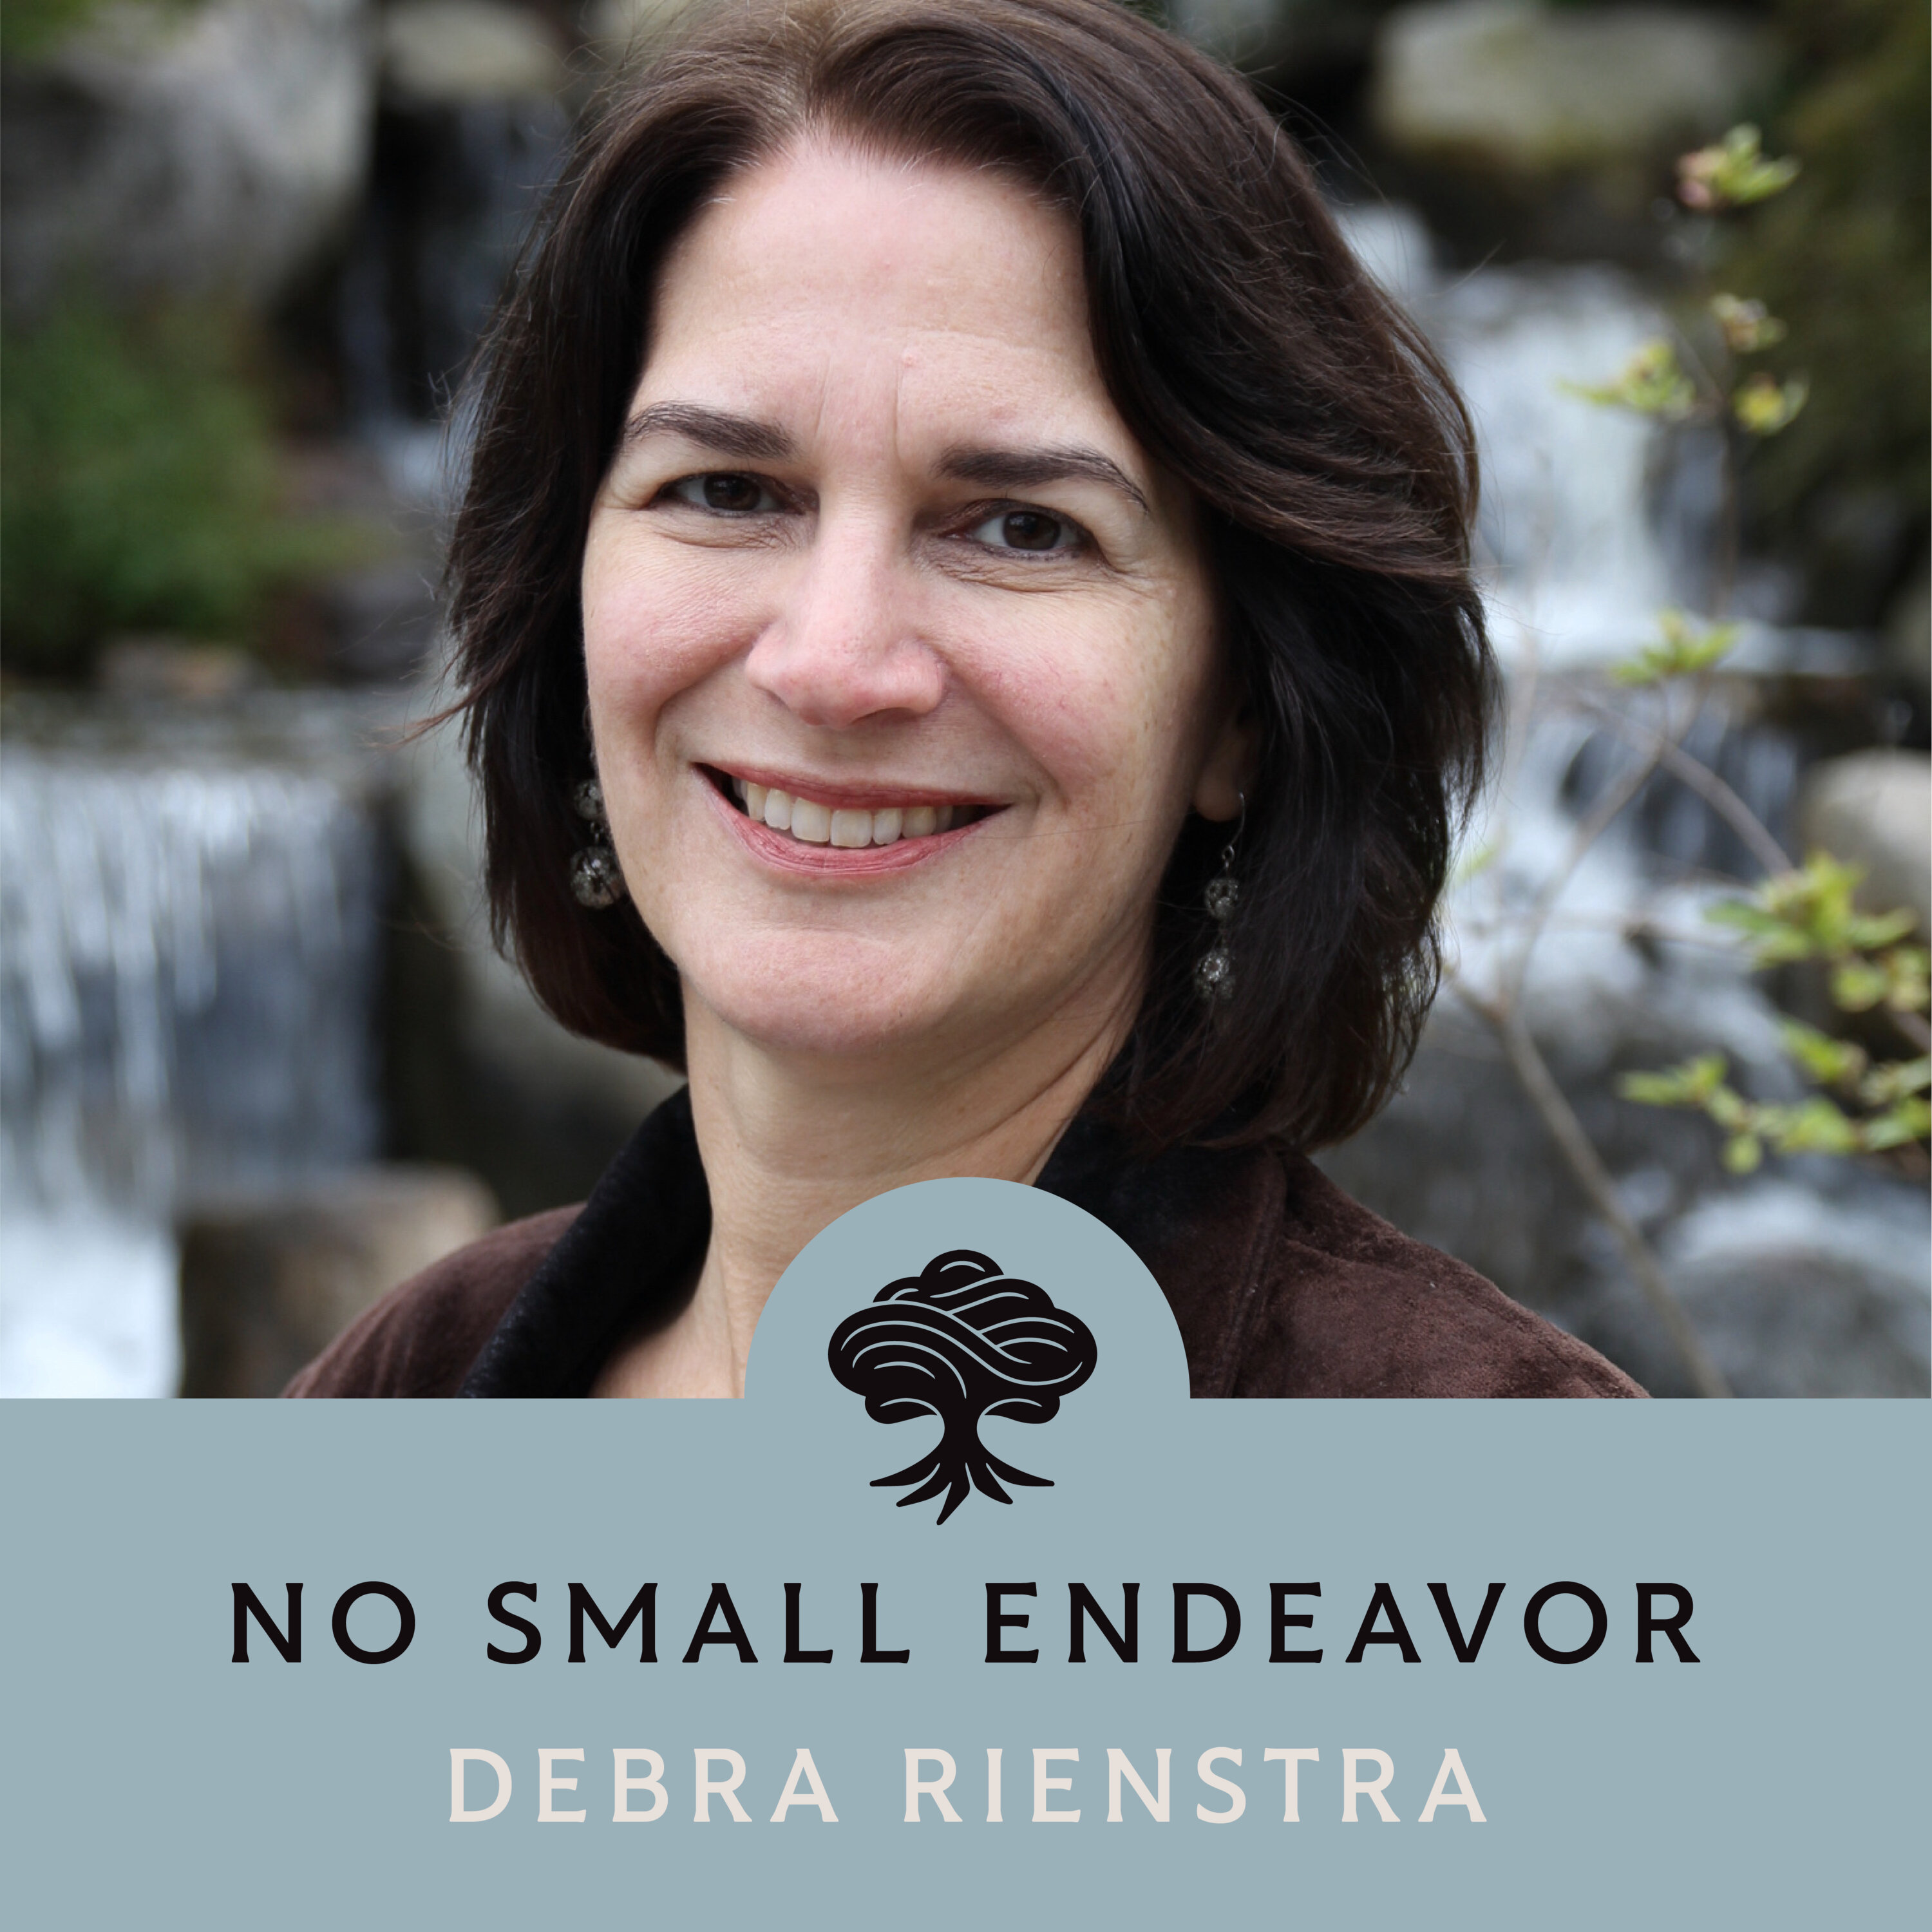 Thumbnail for "100: Healing The Earth: Debra Rienstra".